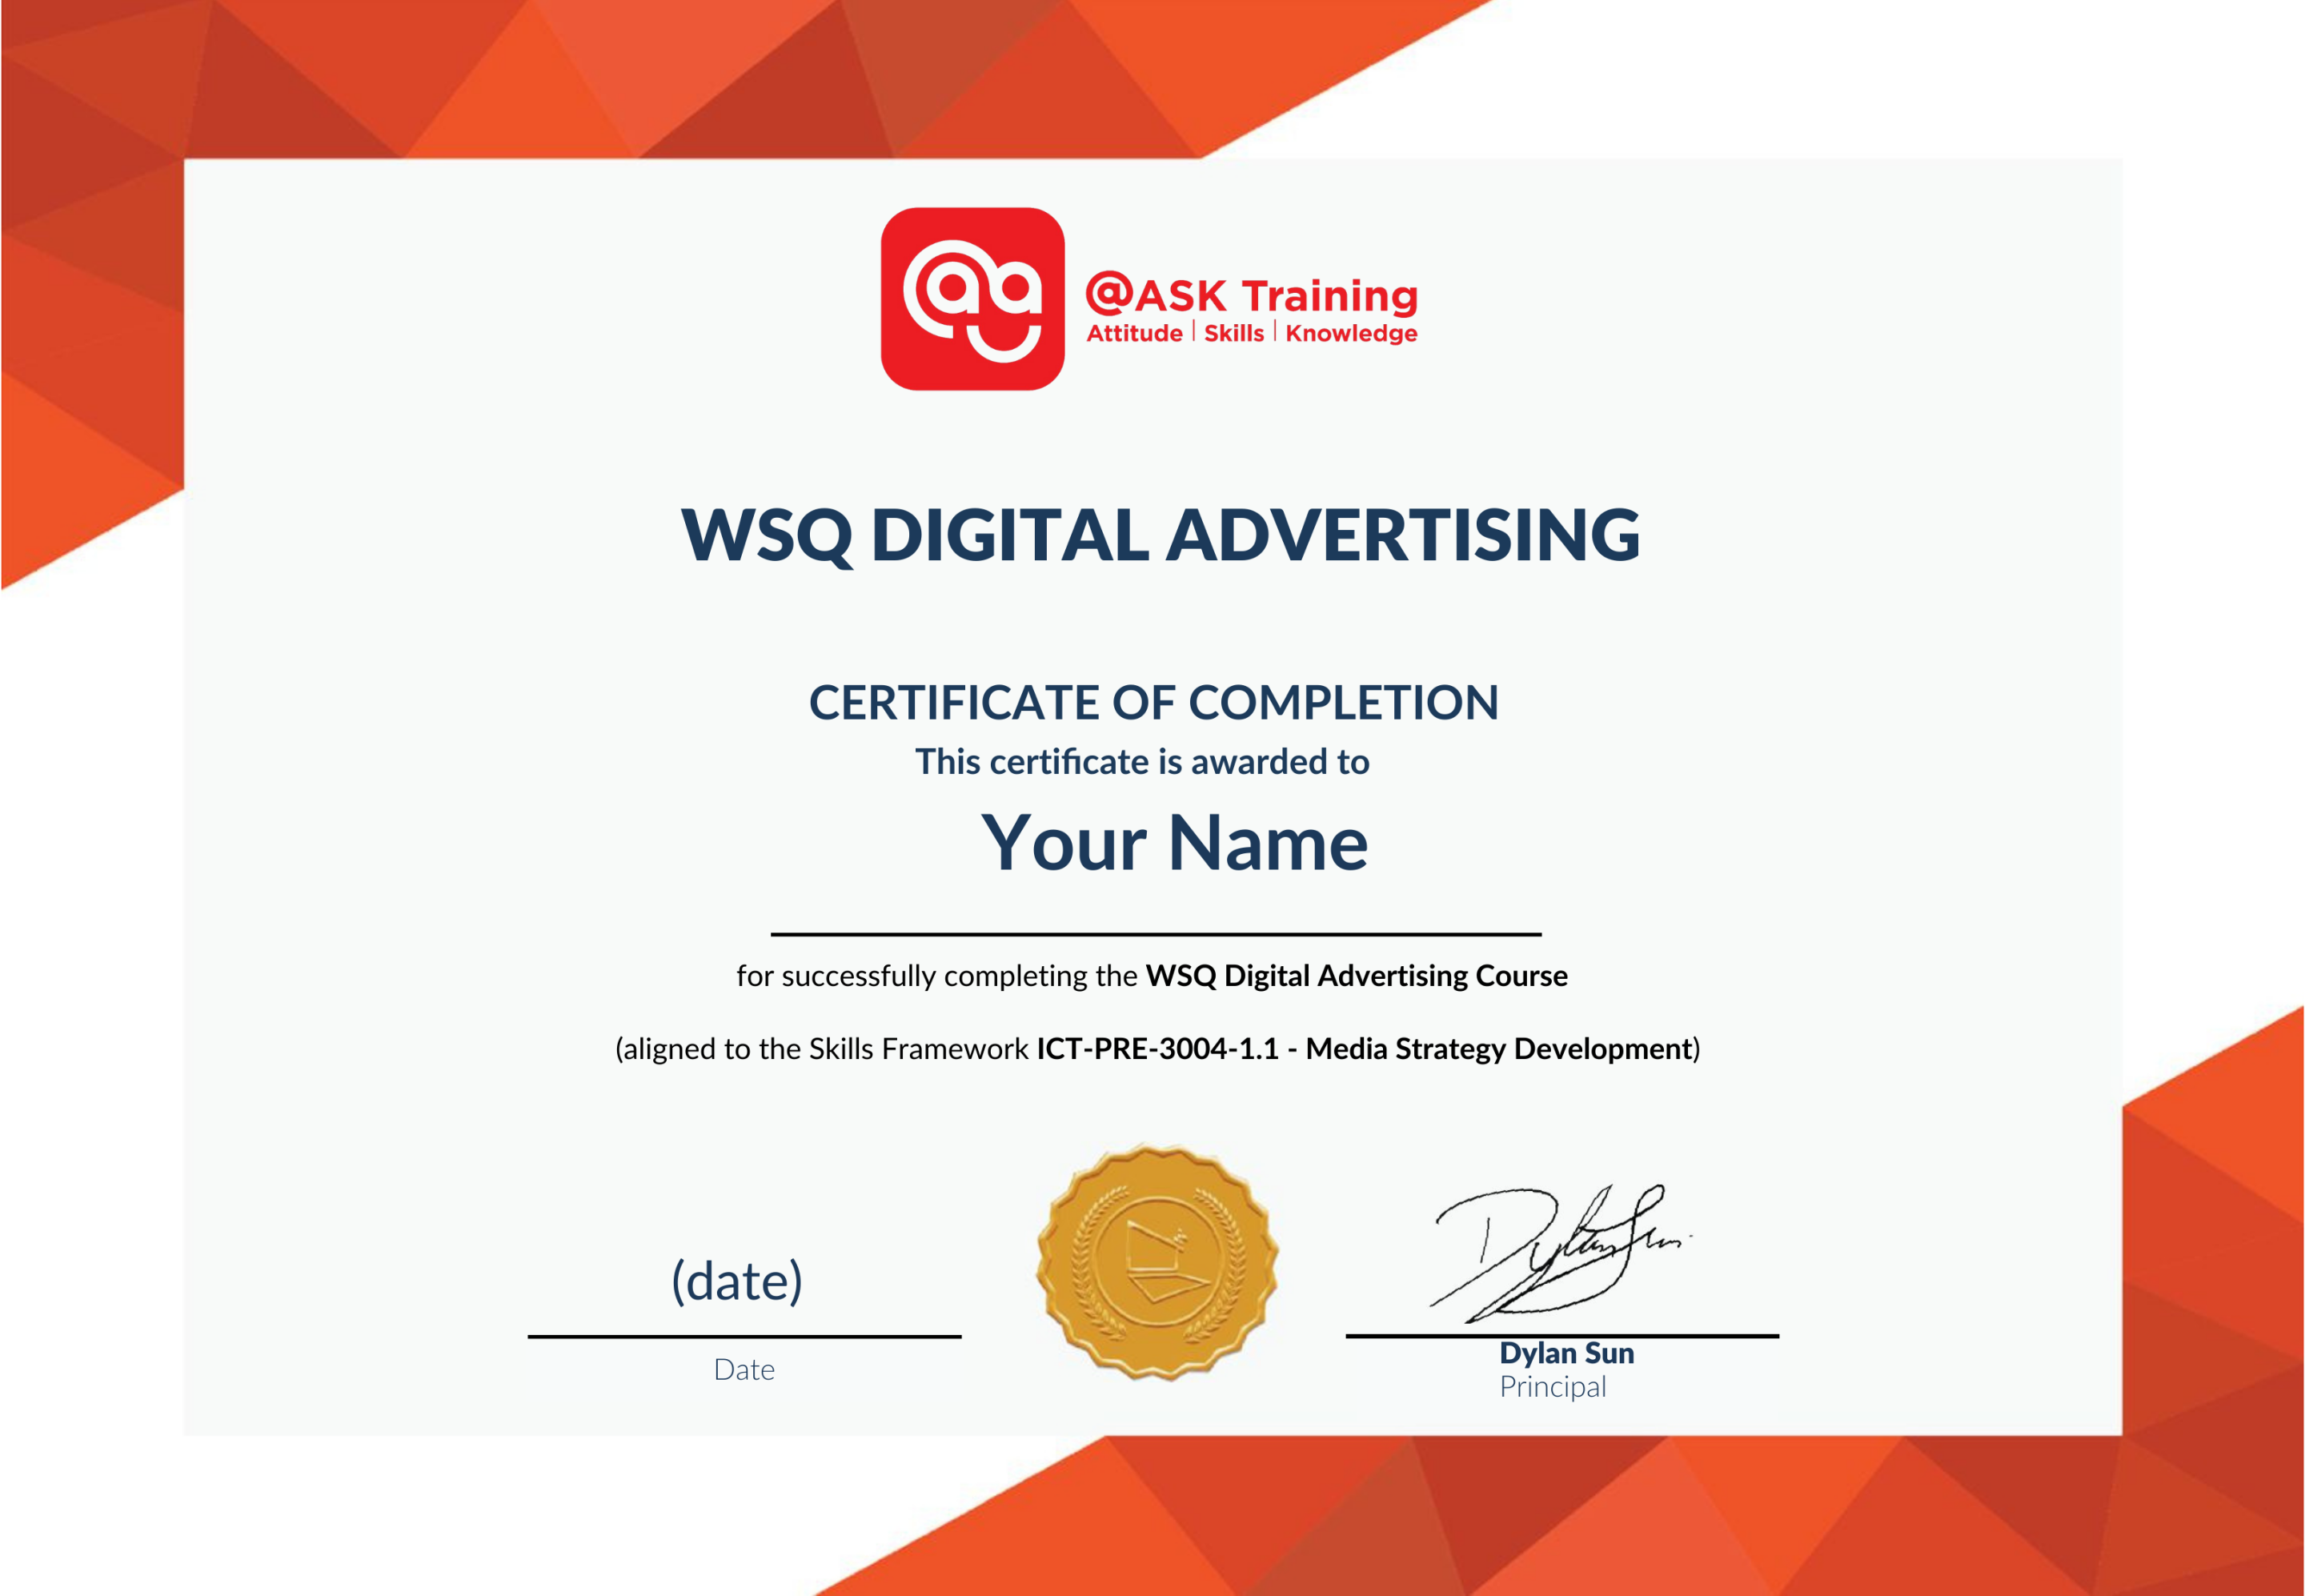 WSQ Digital Advertising Certificate Sample